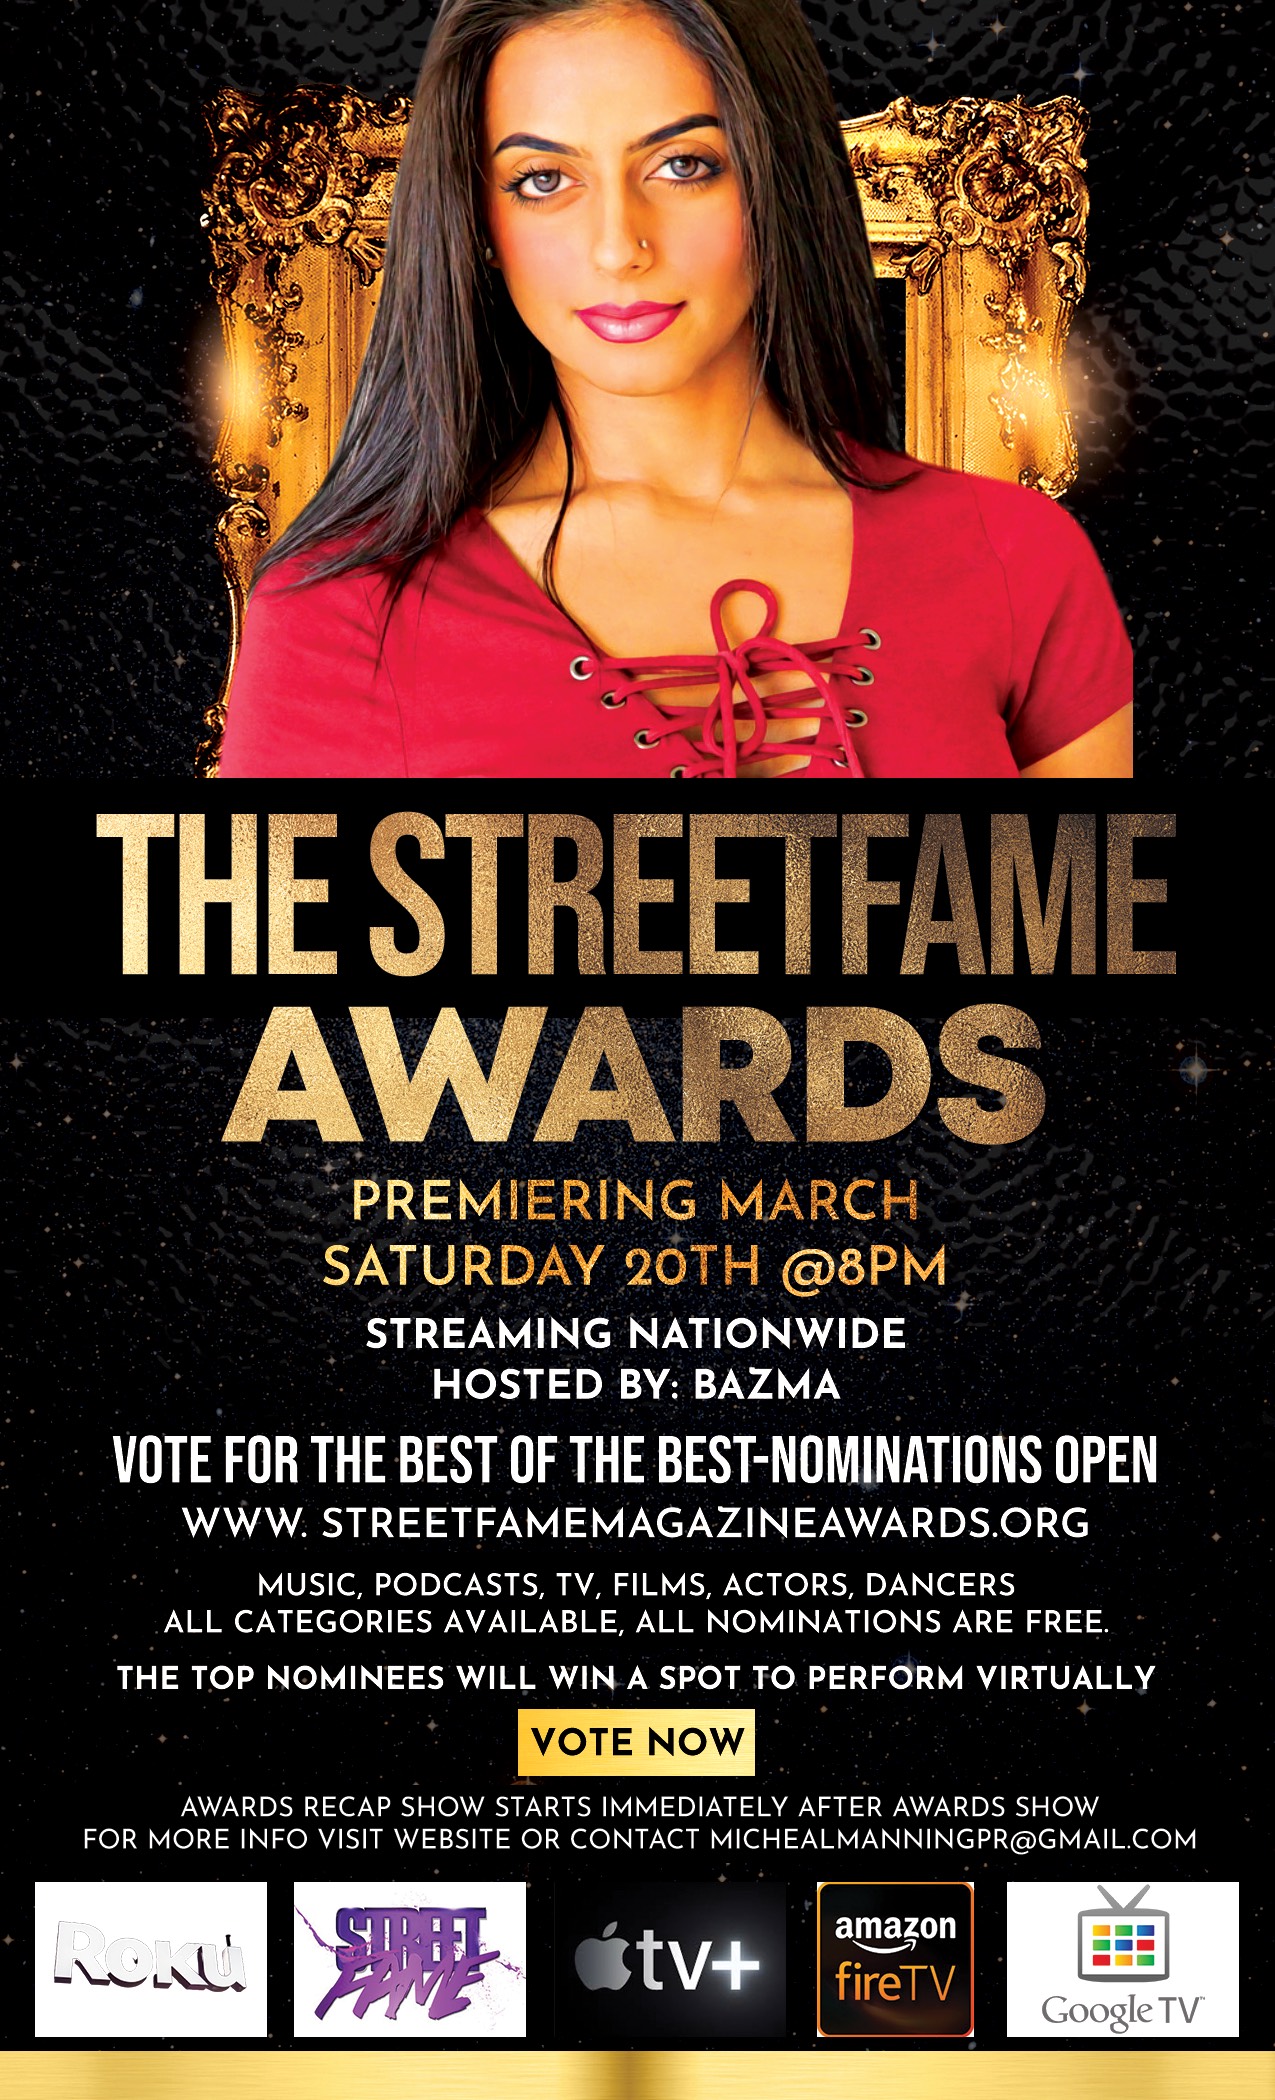 International Actress & Singer Bazma will host The First Annual Street Fame Awards Event!